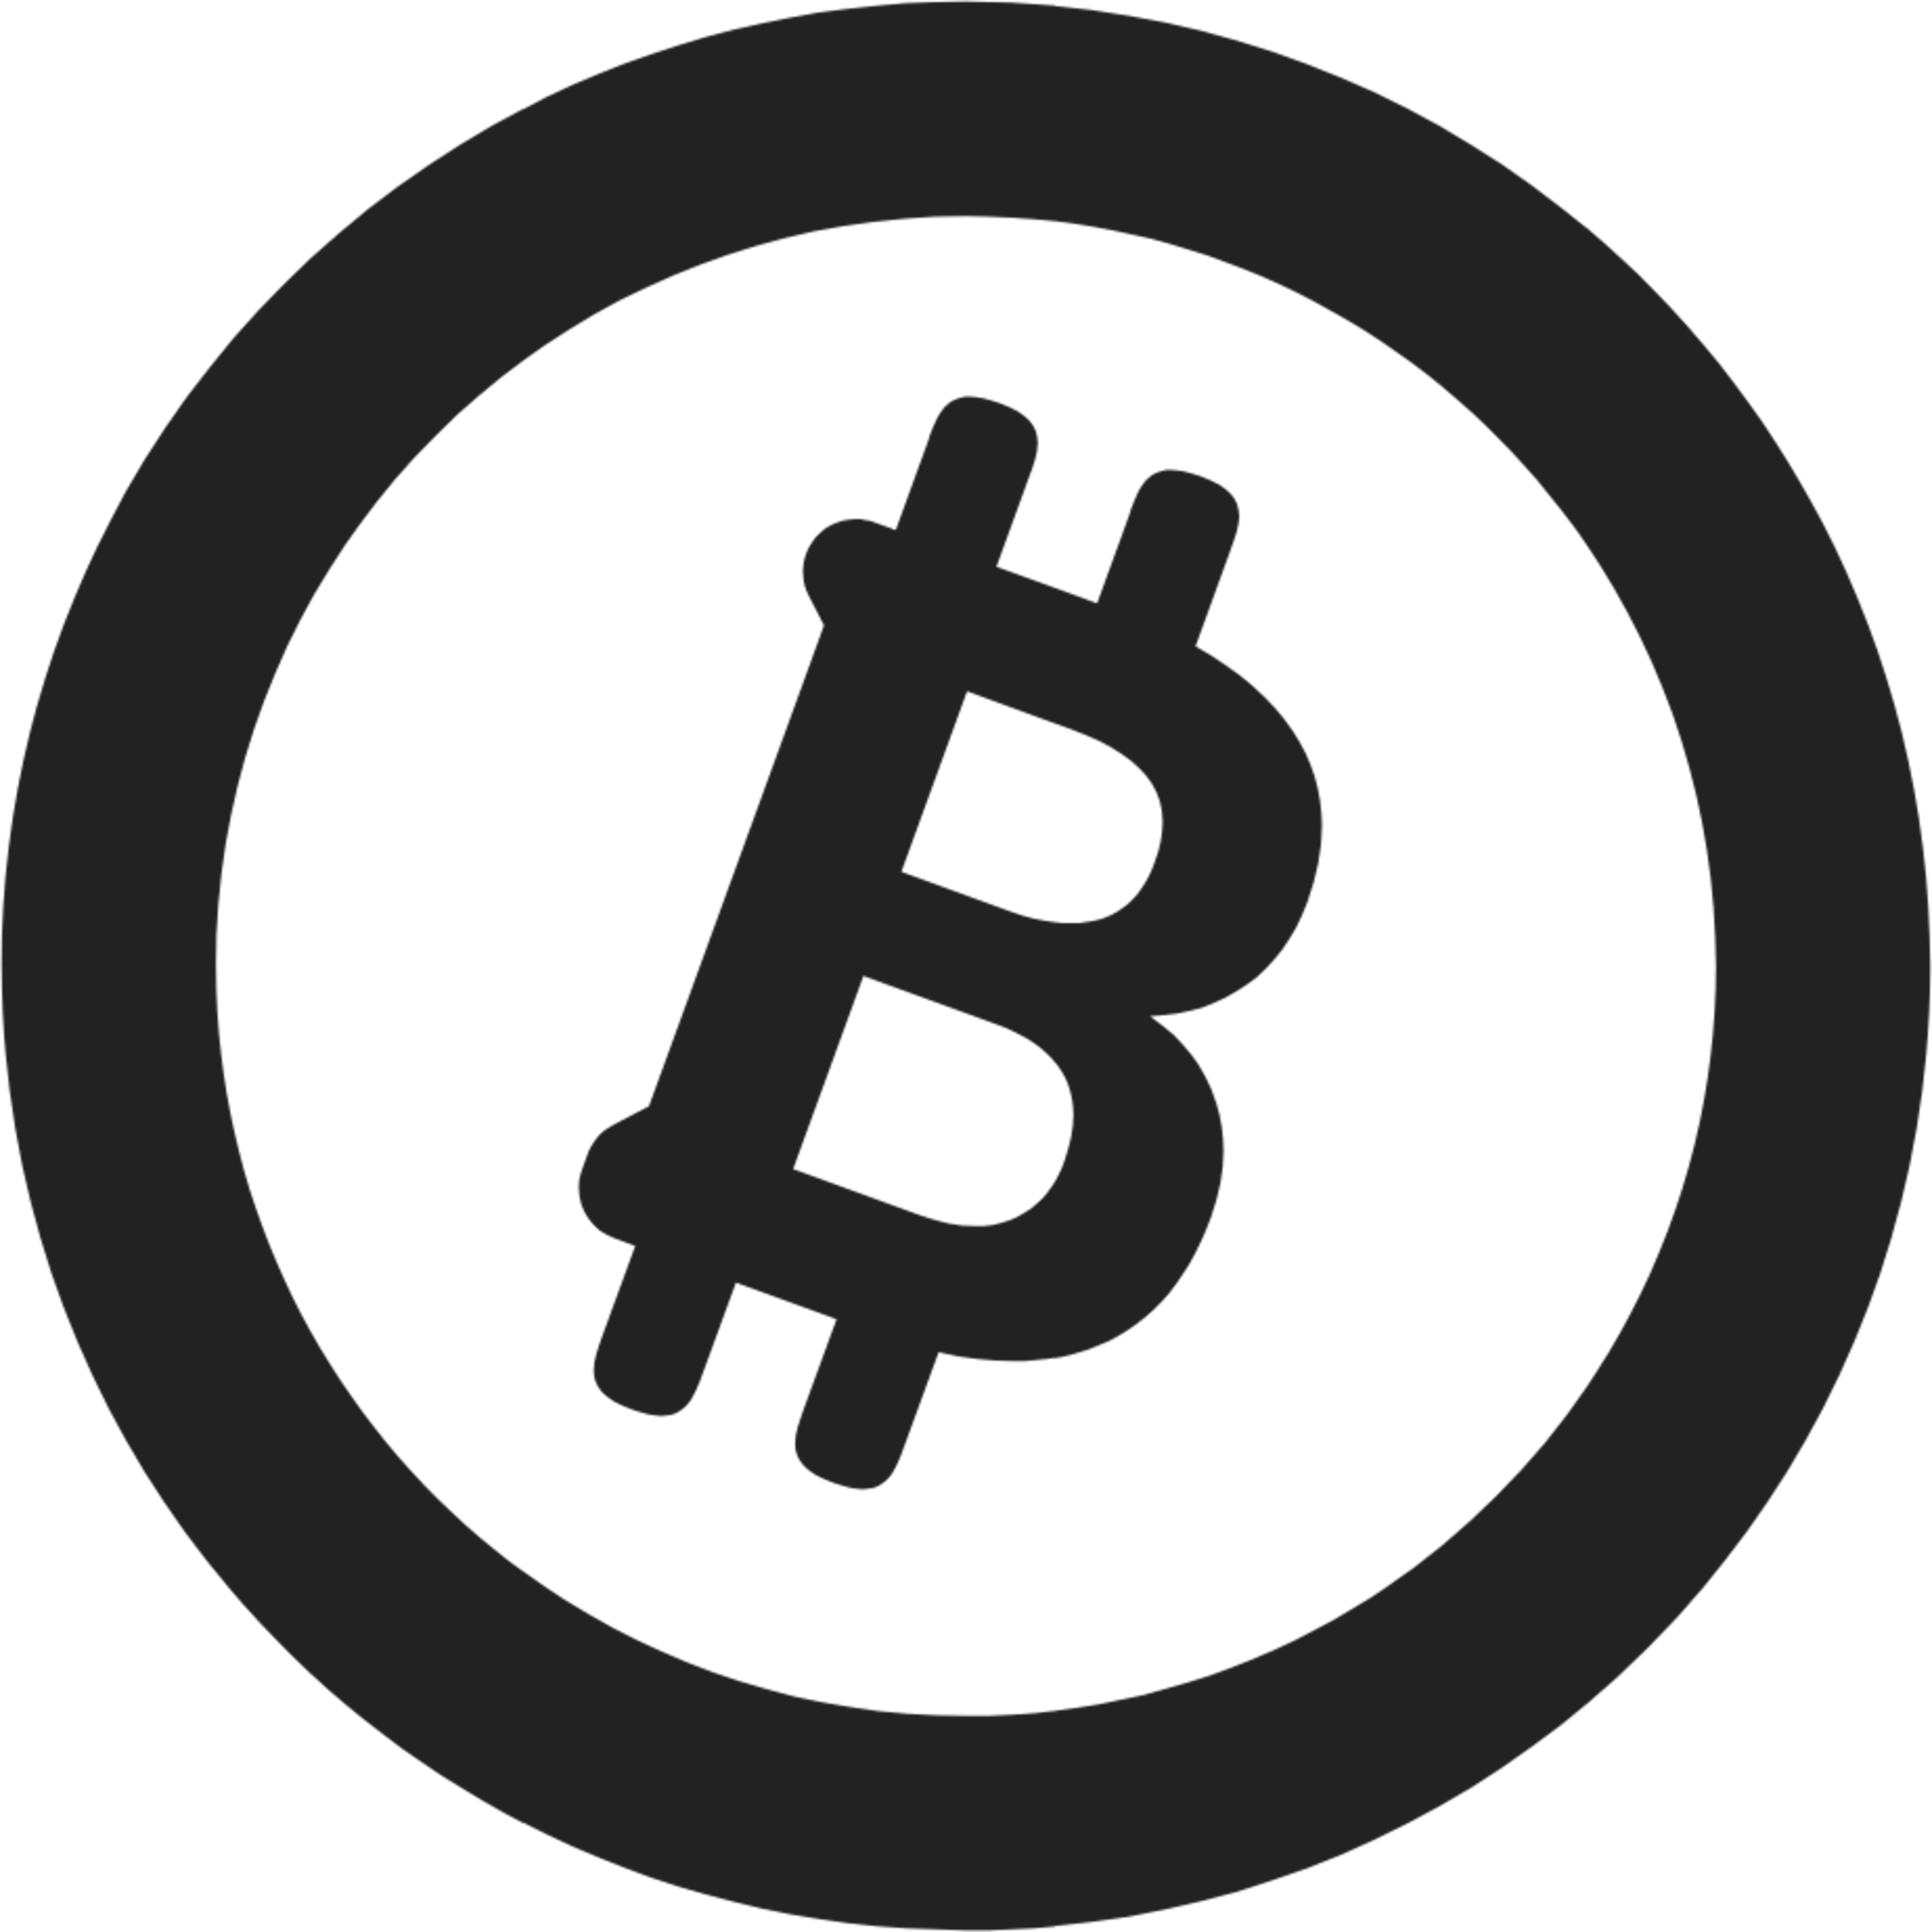 bitcoin money currency crypto icon